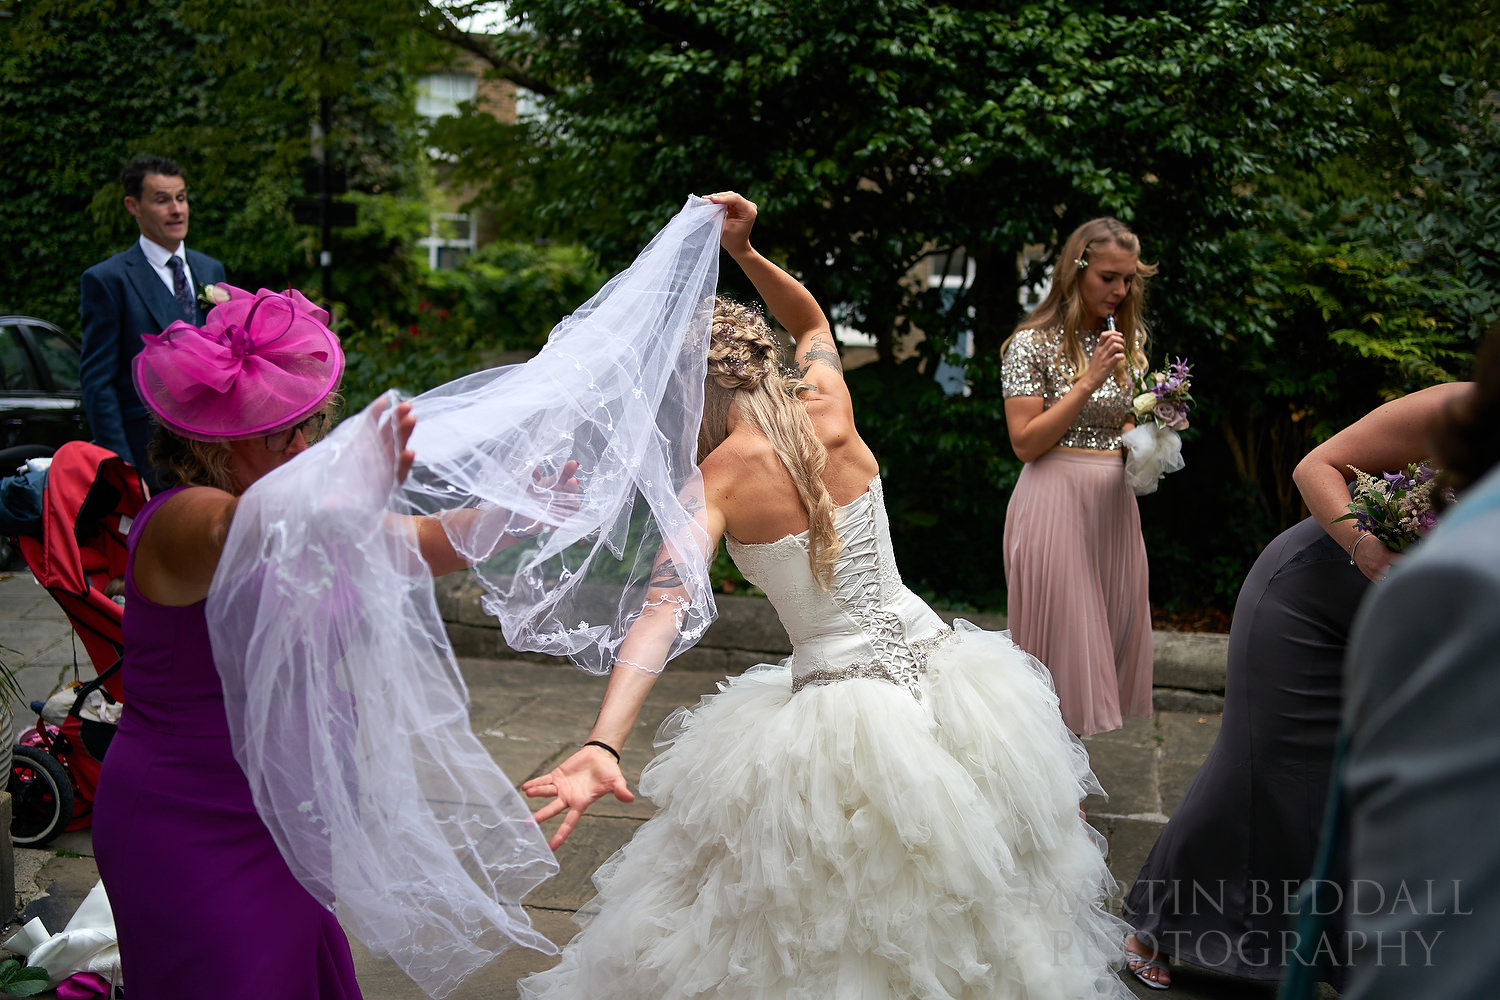 Wedding veil goes on outside the church